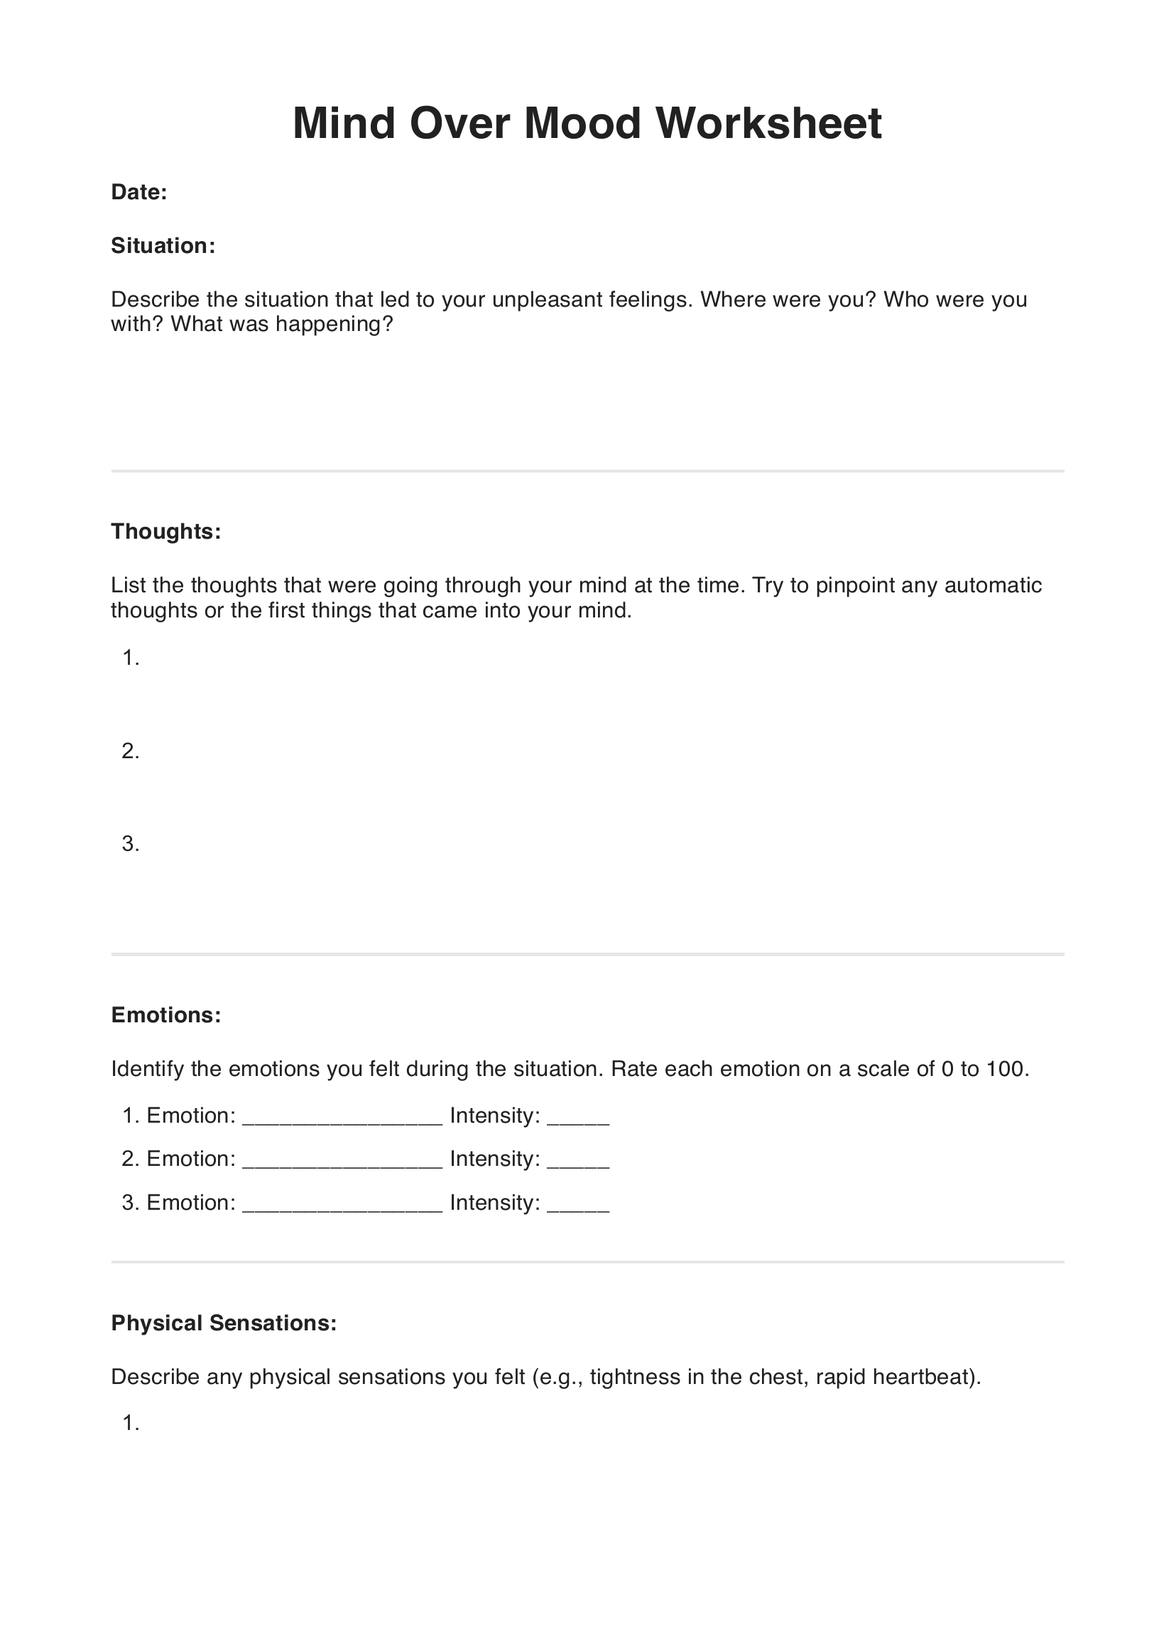 Mind Over Mood Worksheets PDF Example